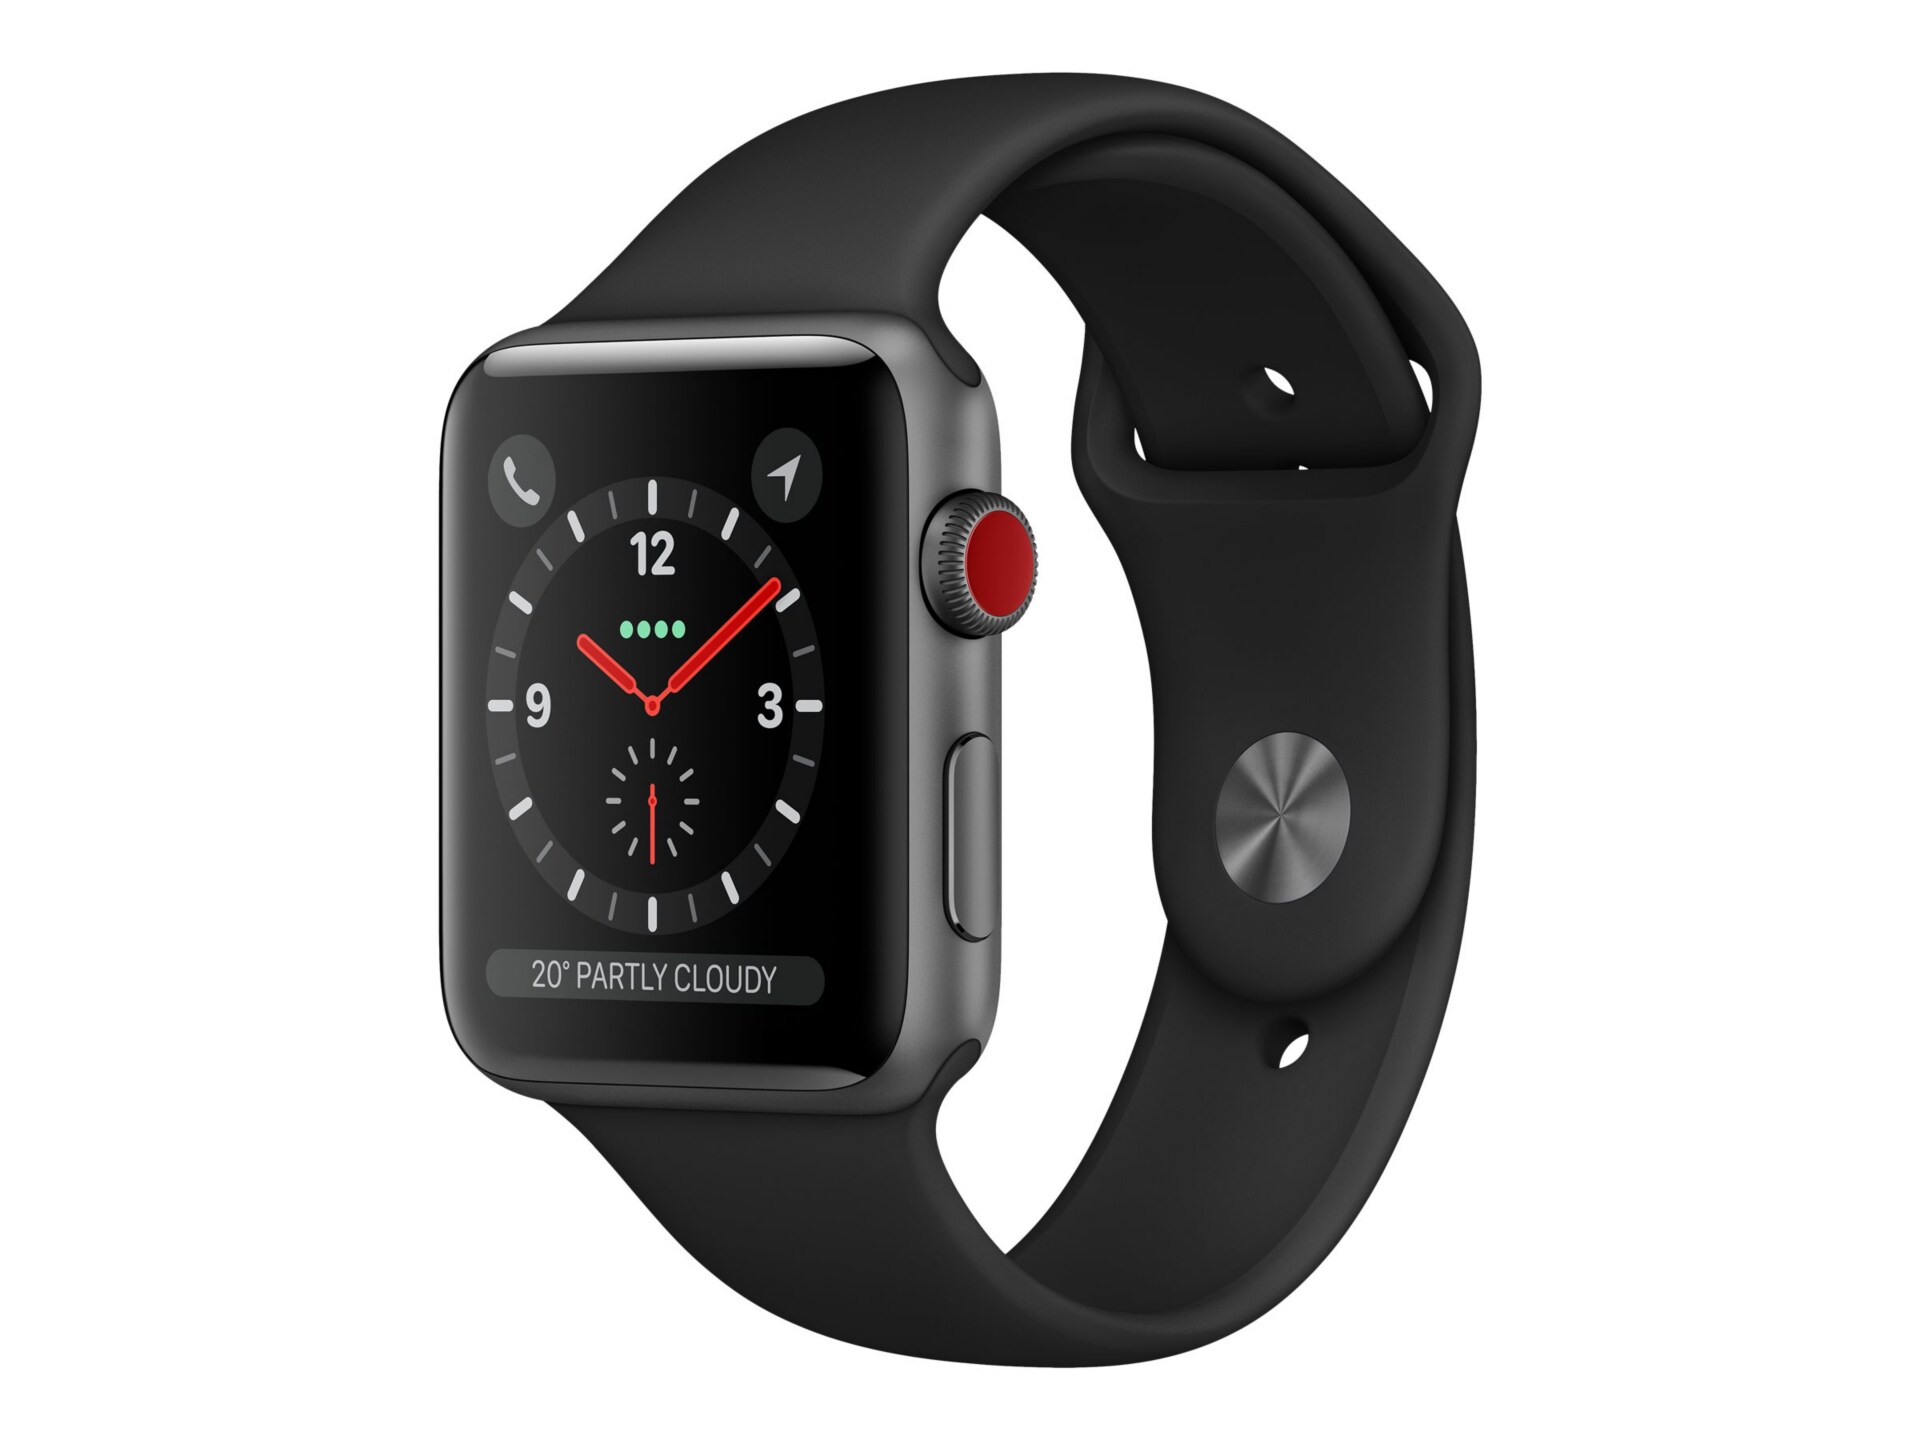 Apple Watch Series 3 (GPS + Cellular) - space gray aluminum - smart watch w